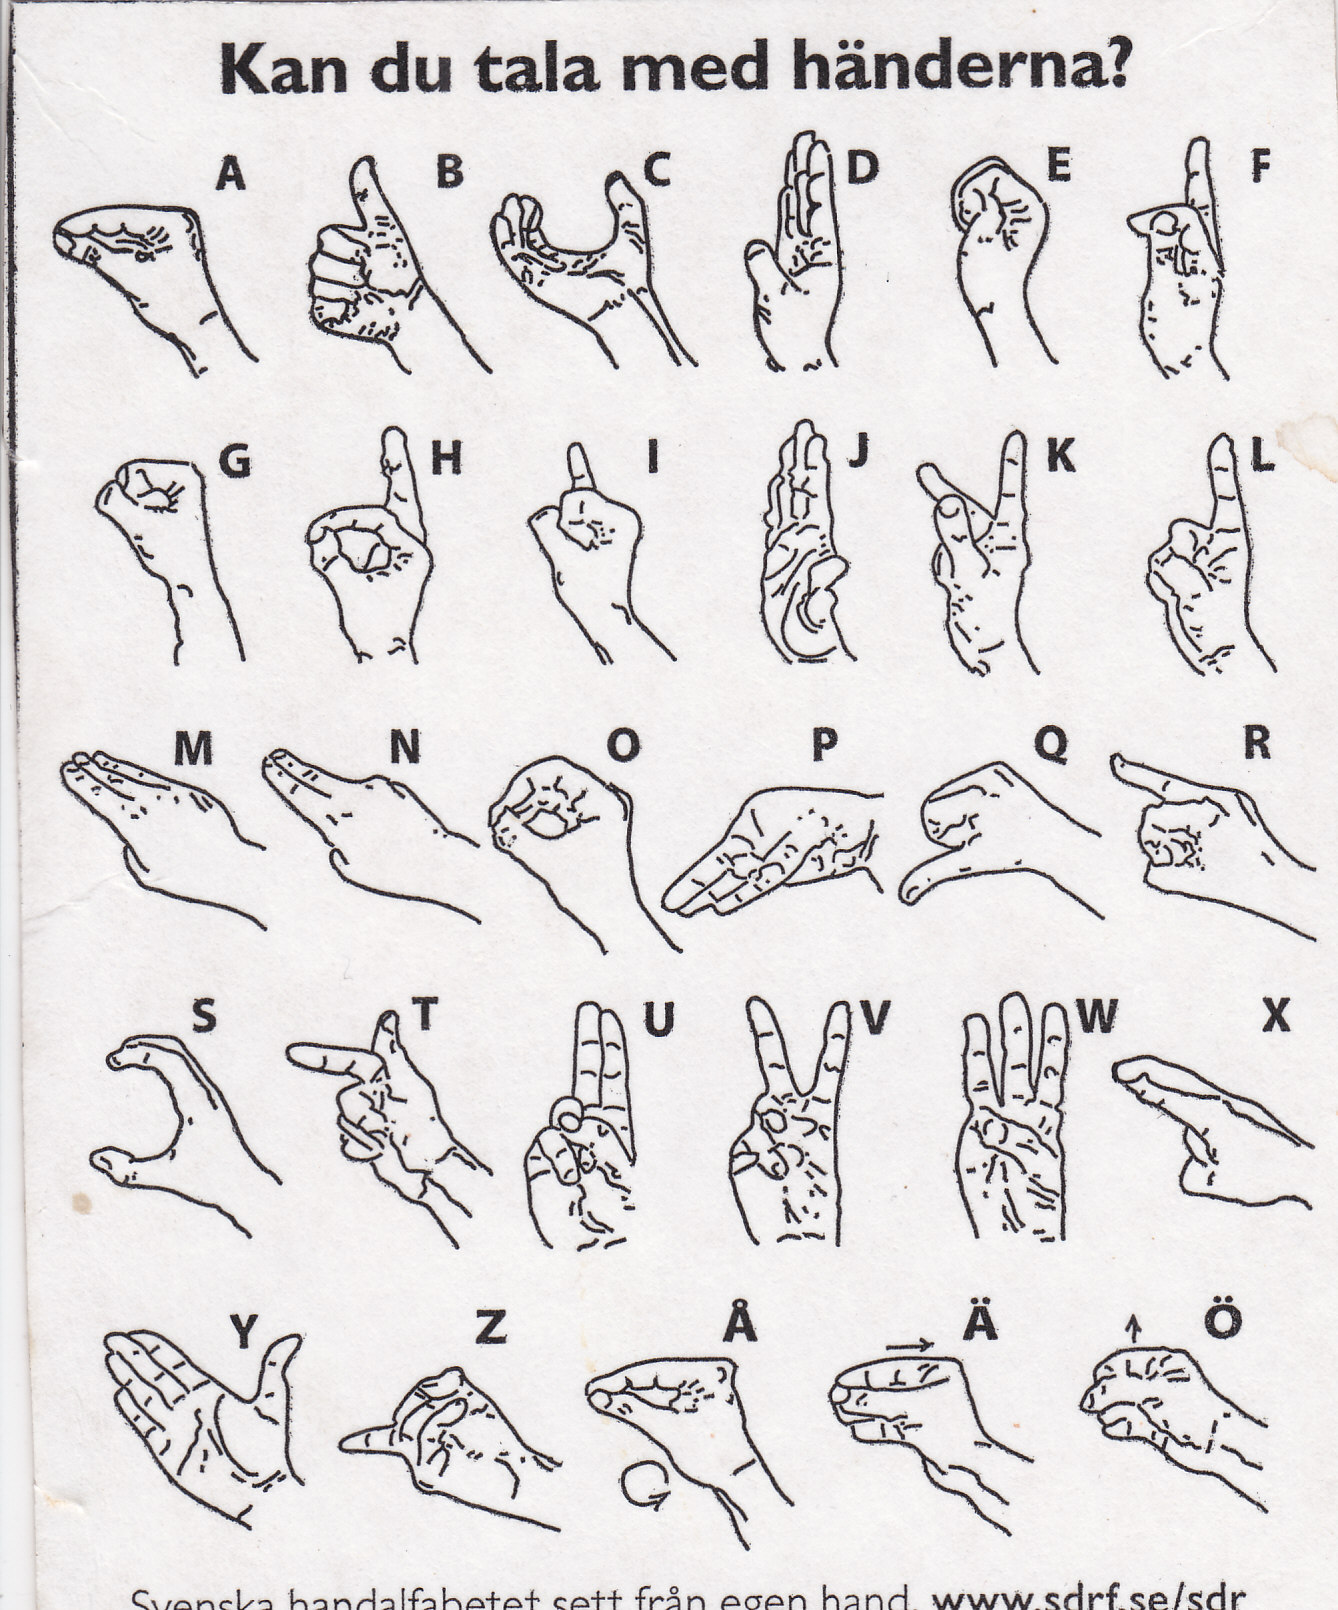 Spanish Sign Language Alphabet Chart